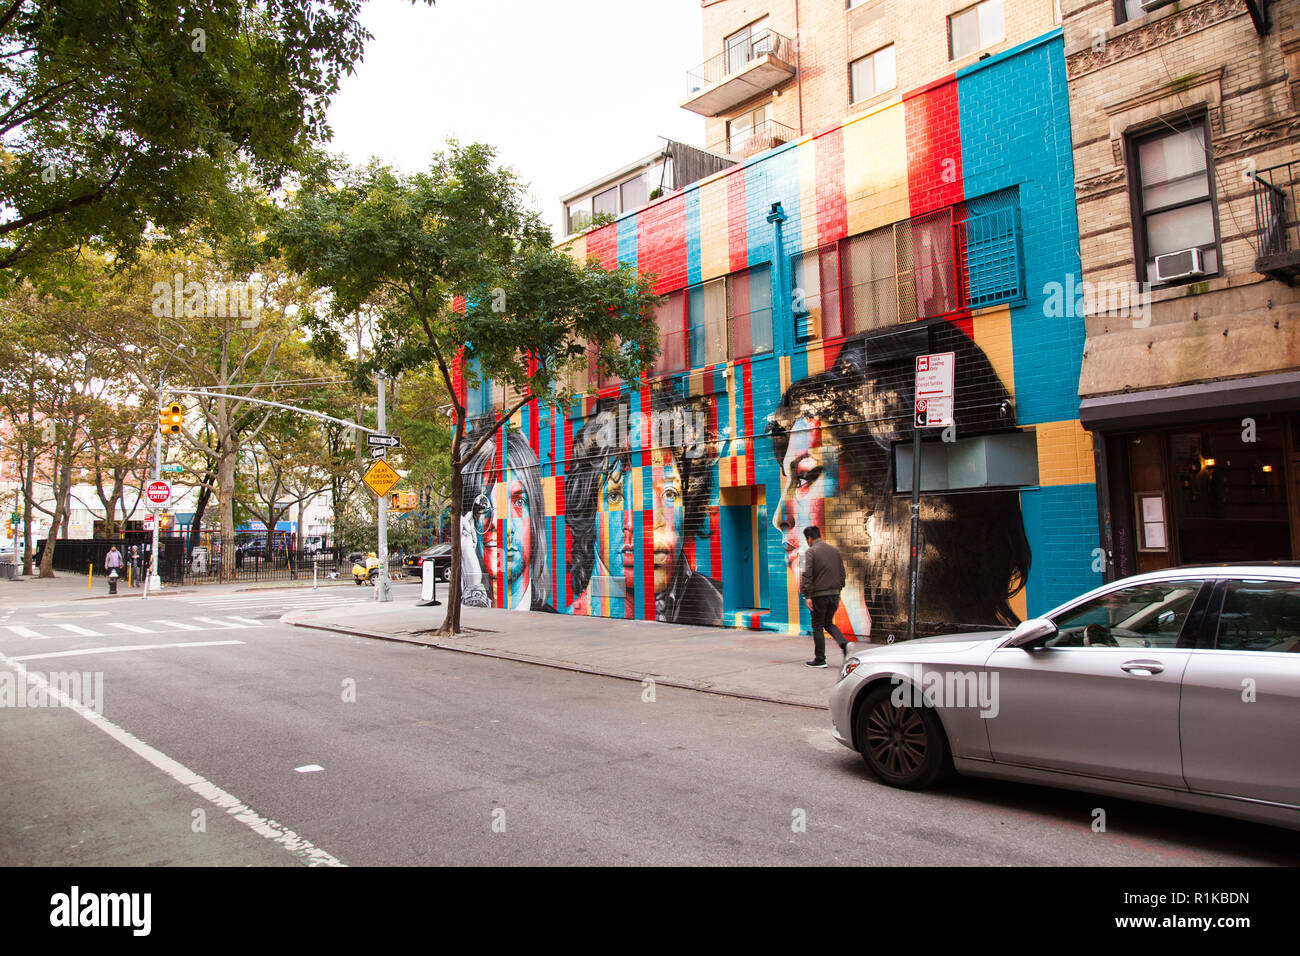 27 club murale di Eduardo Kobra, 170 Forsyth Street & Rivington Street sulla Lower East Side di New York City, Stati Uniti d'America. Foto Stock